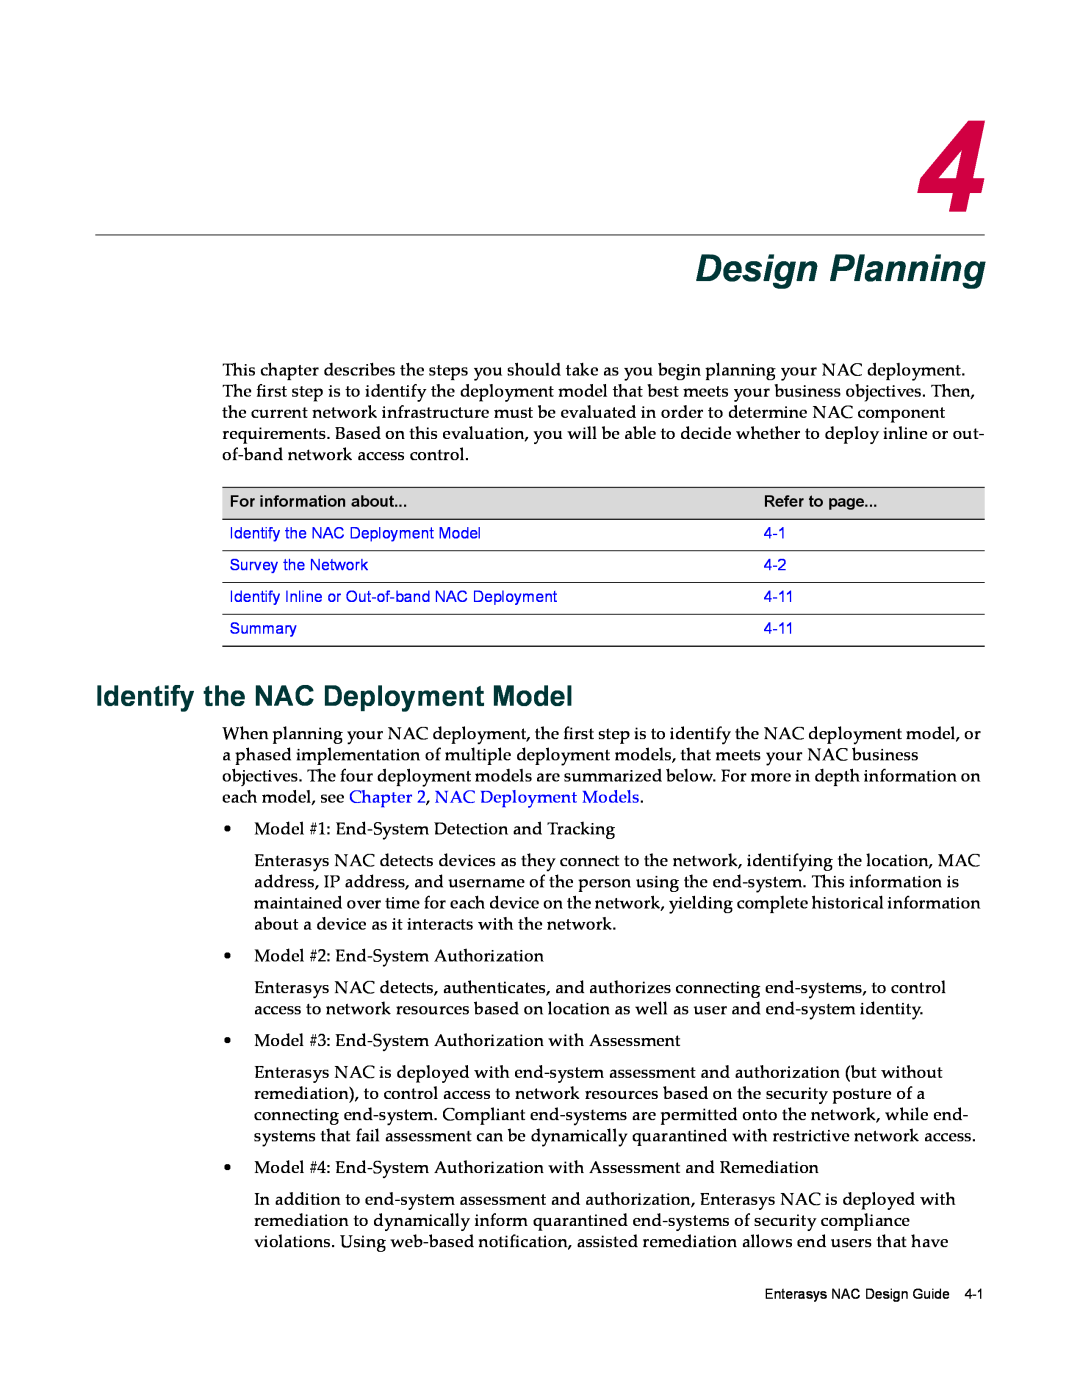 Enterasys Networks 9034385 manual Design Planning, Identify the NAC Deployment Model 